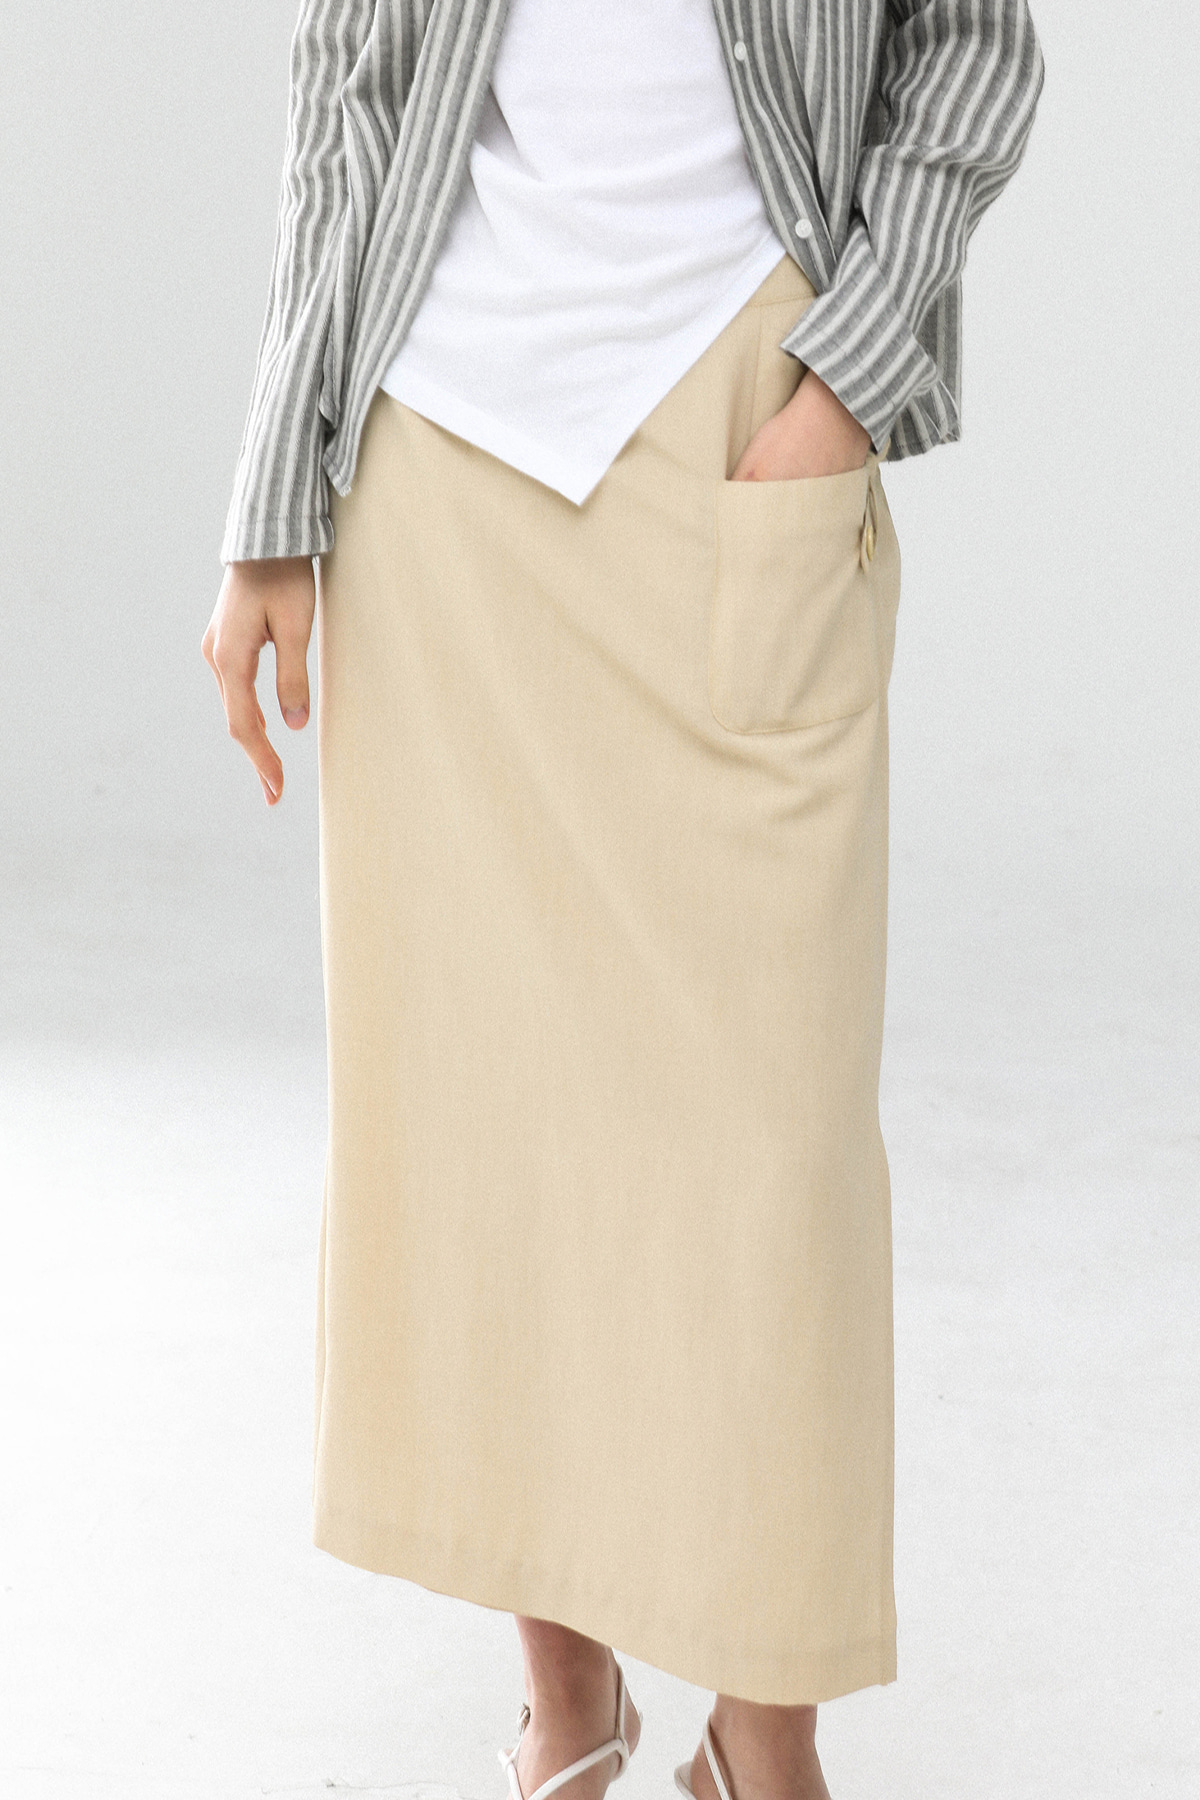 Lap Skirt (Beige)